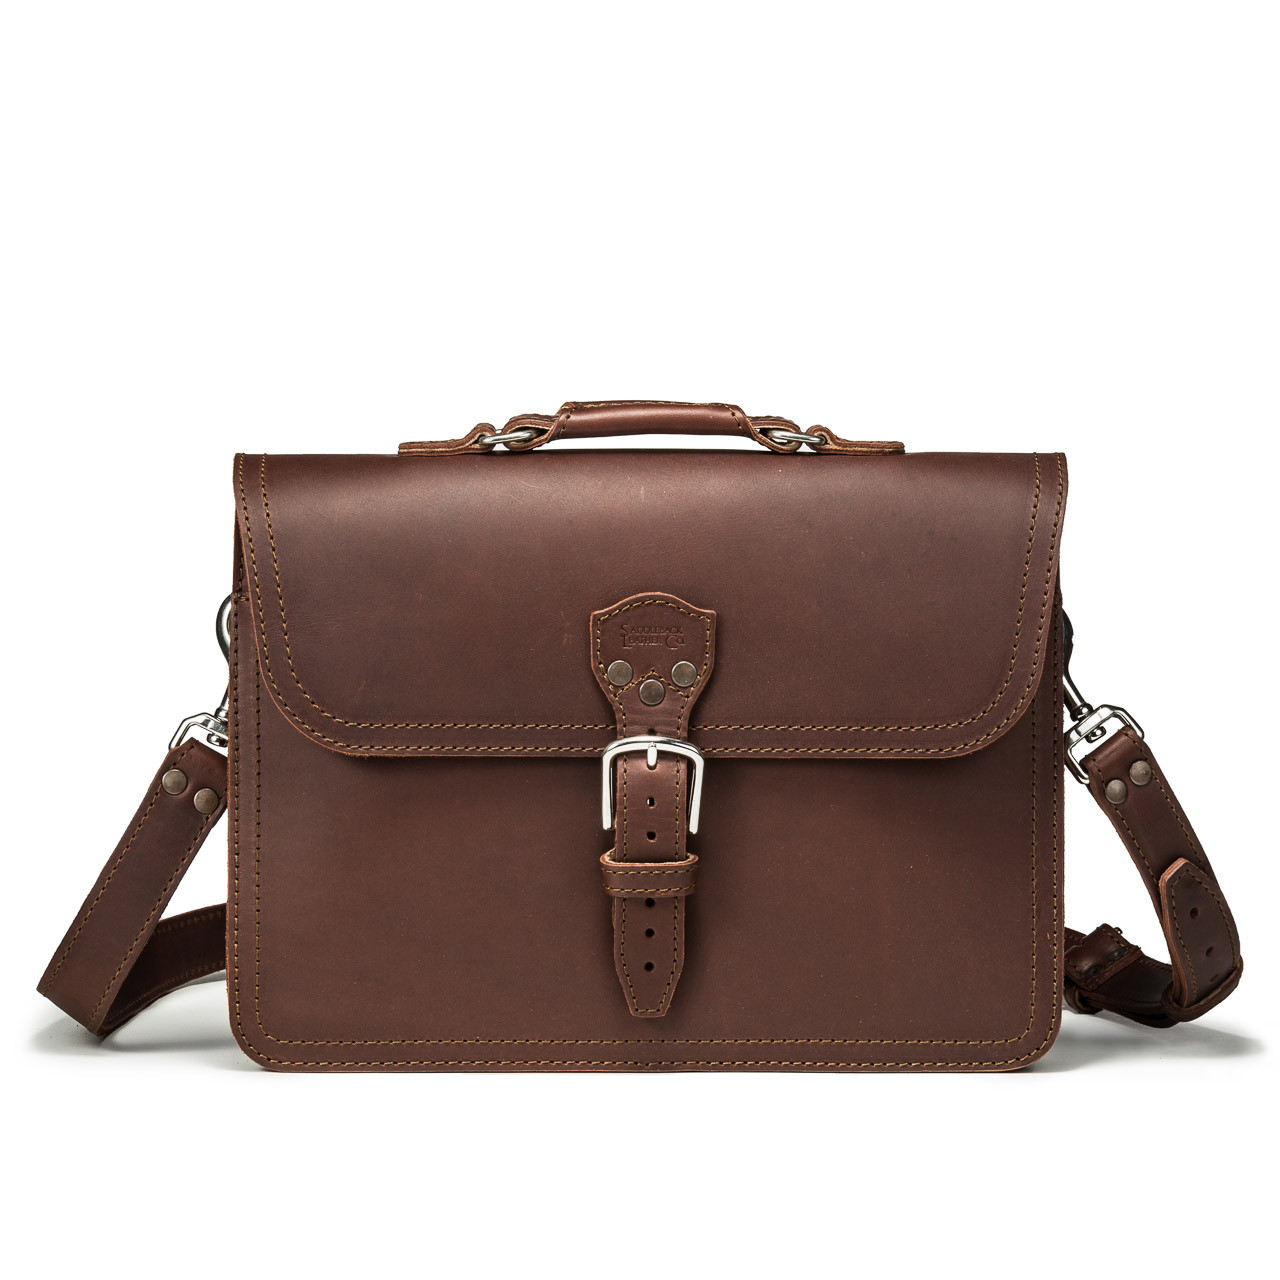 Slim Leather Laptop Bag for Men with Shoulder Strap and 14 Inch